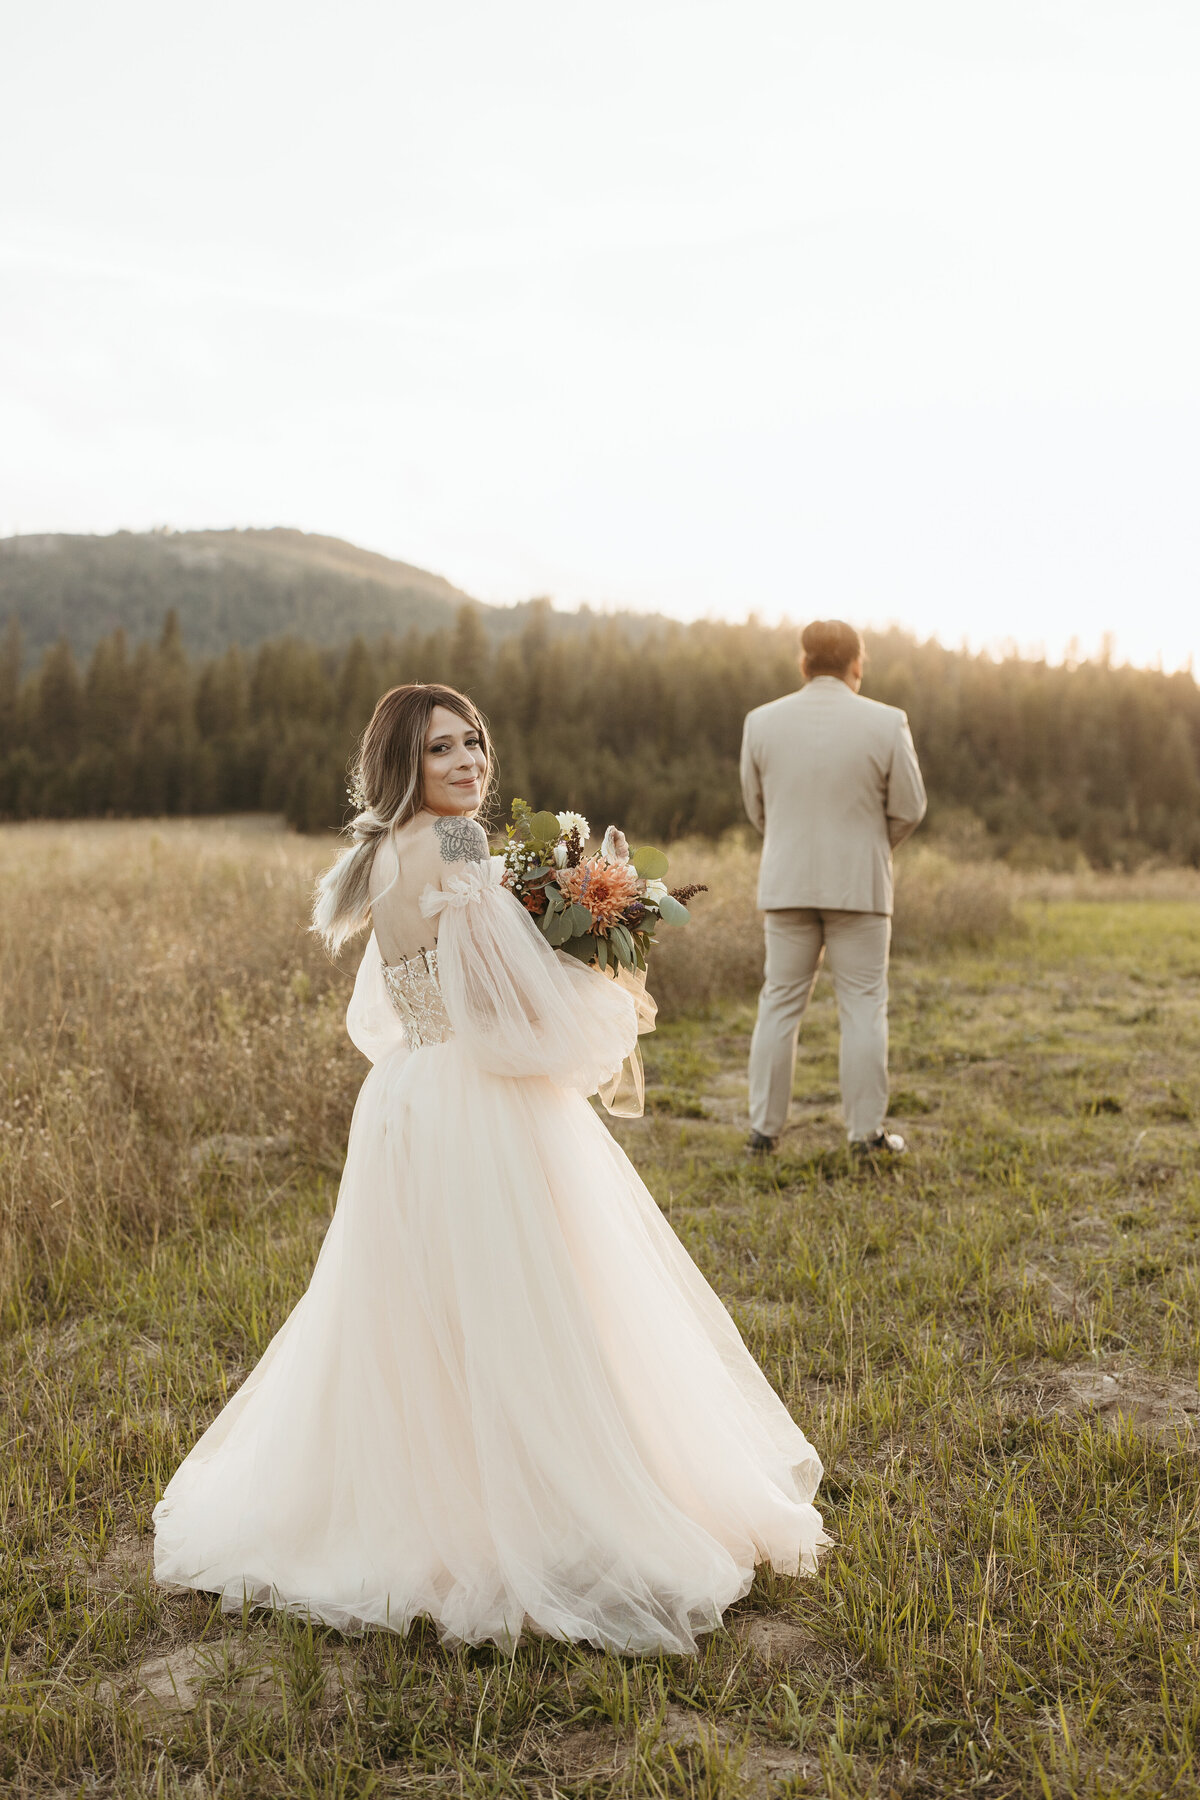 Wedding Photography Spokane, WA  | Arch & Elm Photography